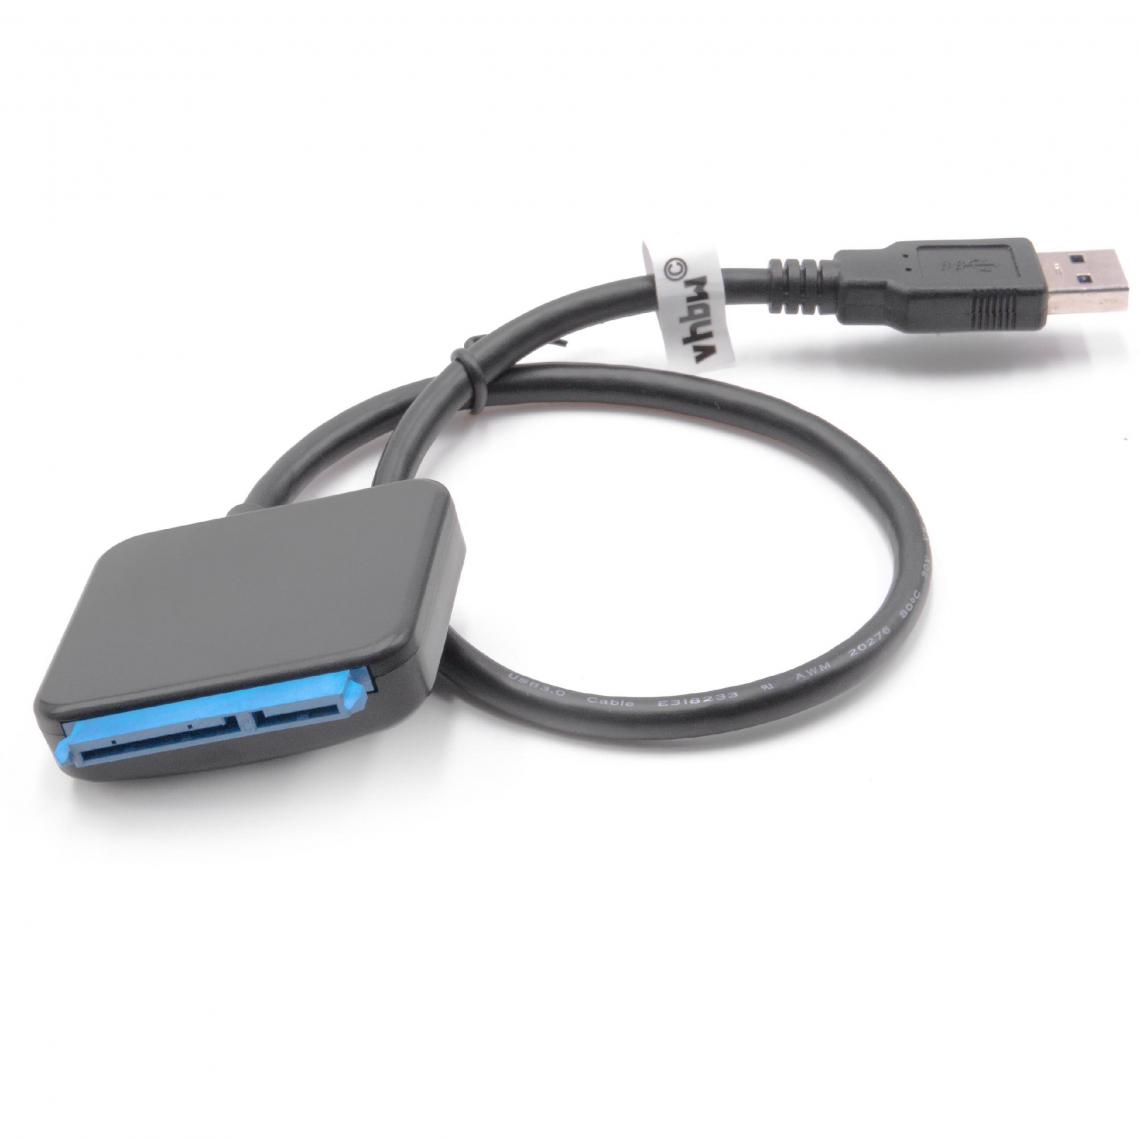 Vhbw - vhbw SATA III vers USB 3.0 Câble de raccordement pour disque dur 2'5", 3'5" HDD, SSD Plug & Play bleu / noir - Accessoires alimentation